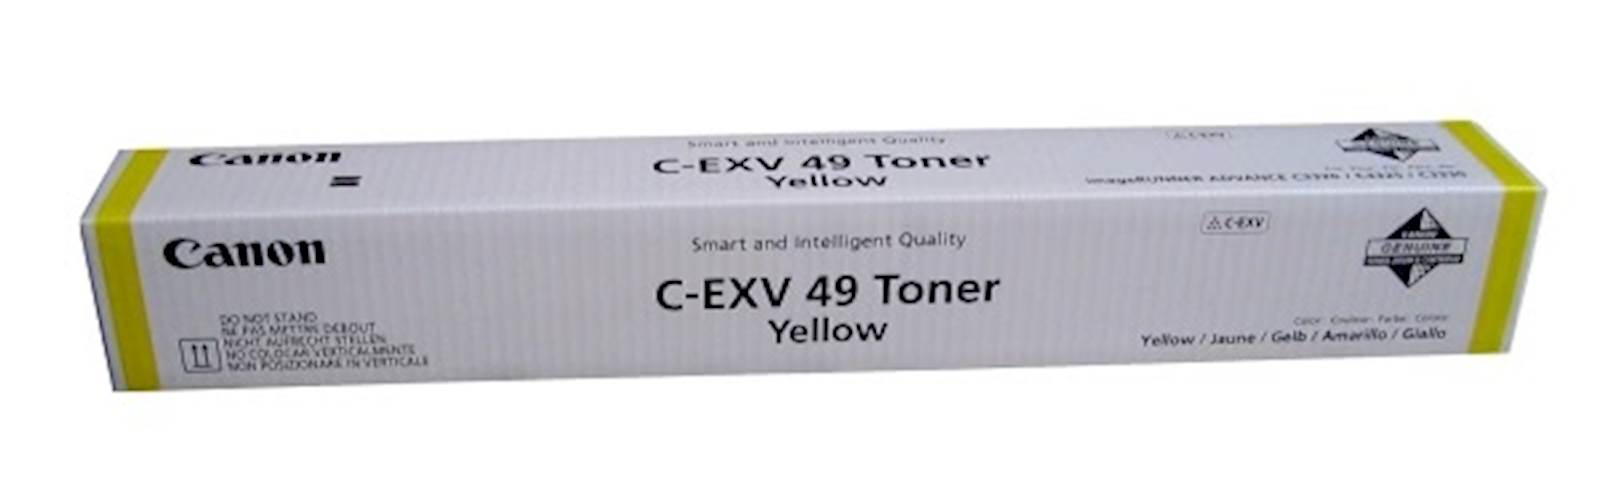 Toner CANON C-EXV 49 Yellow CEXV49Y